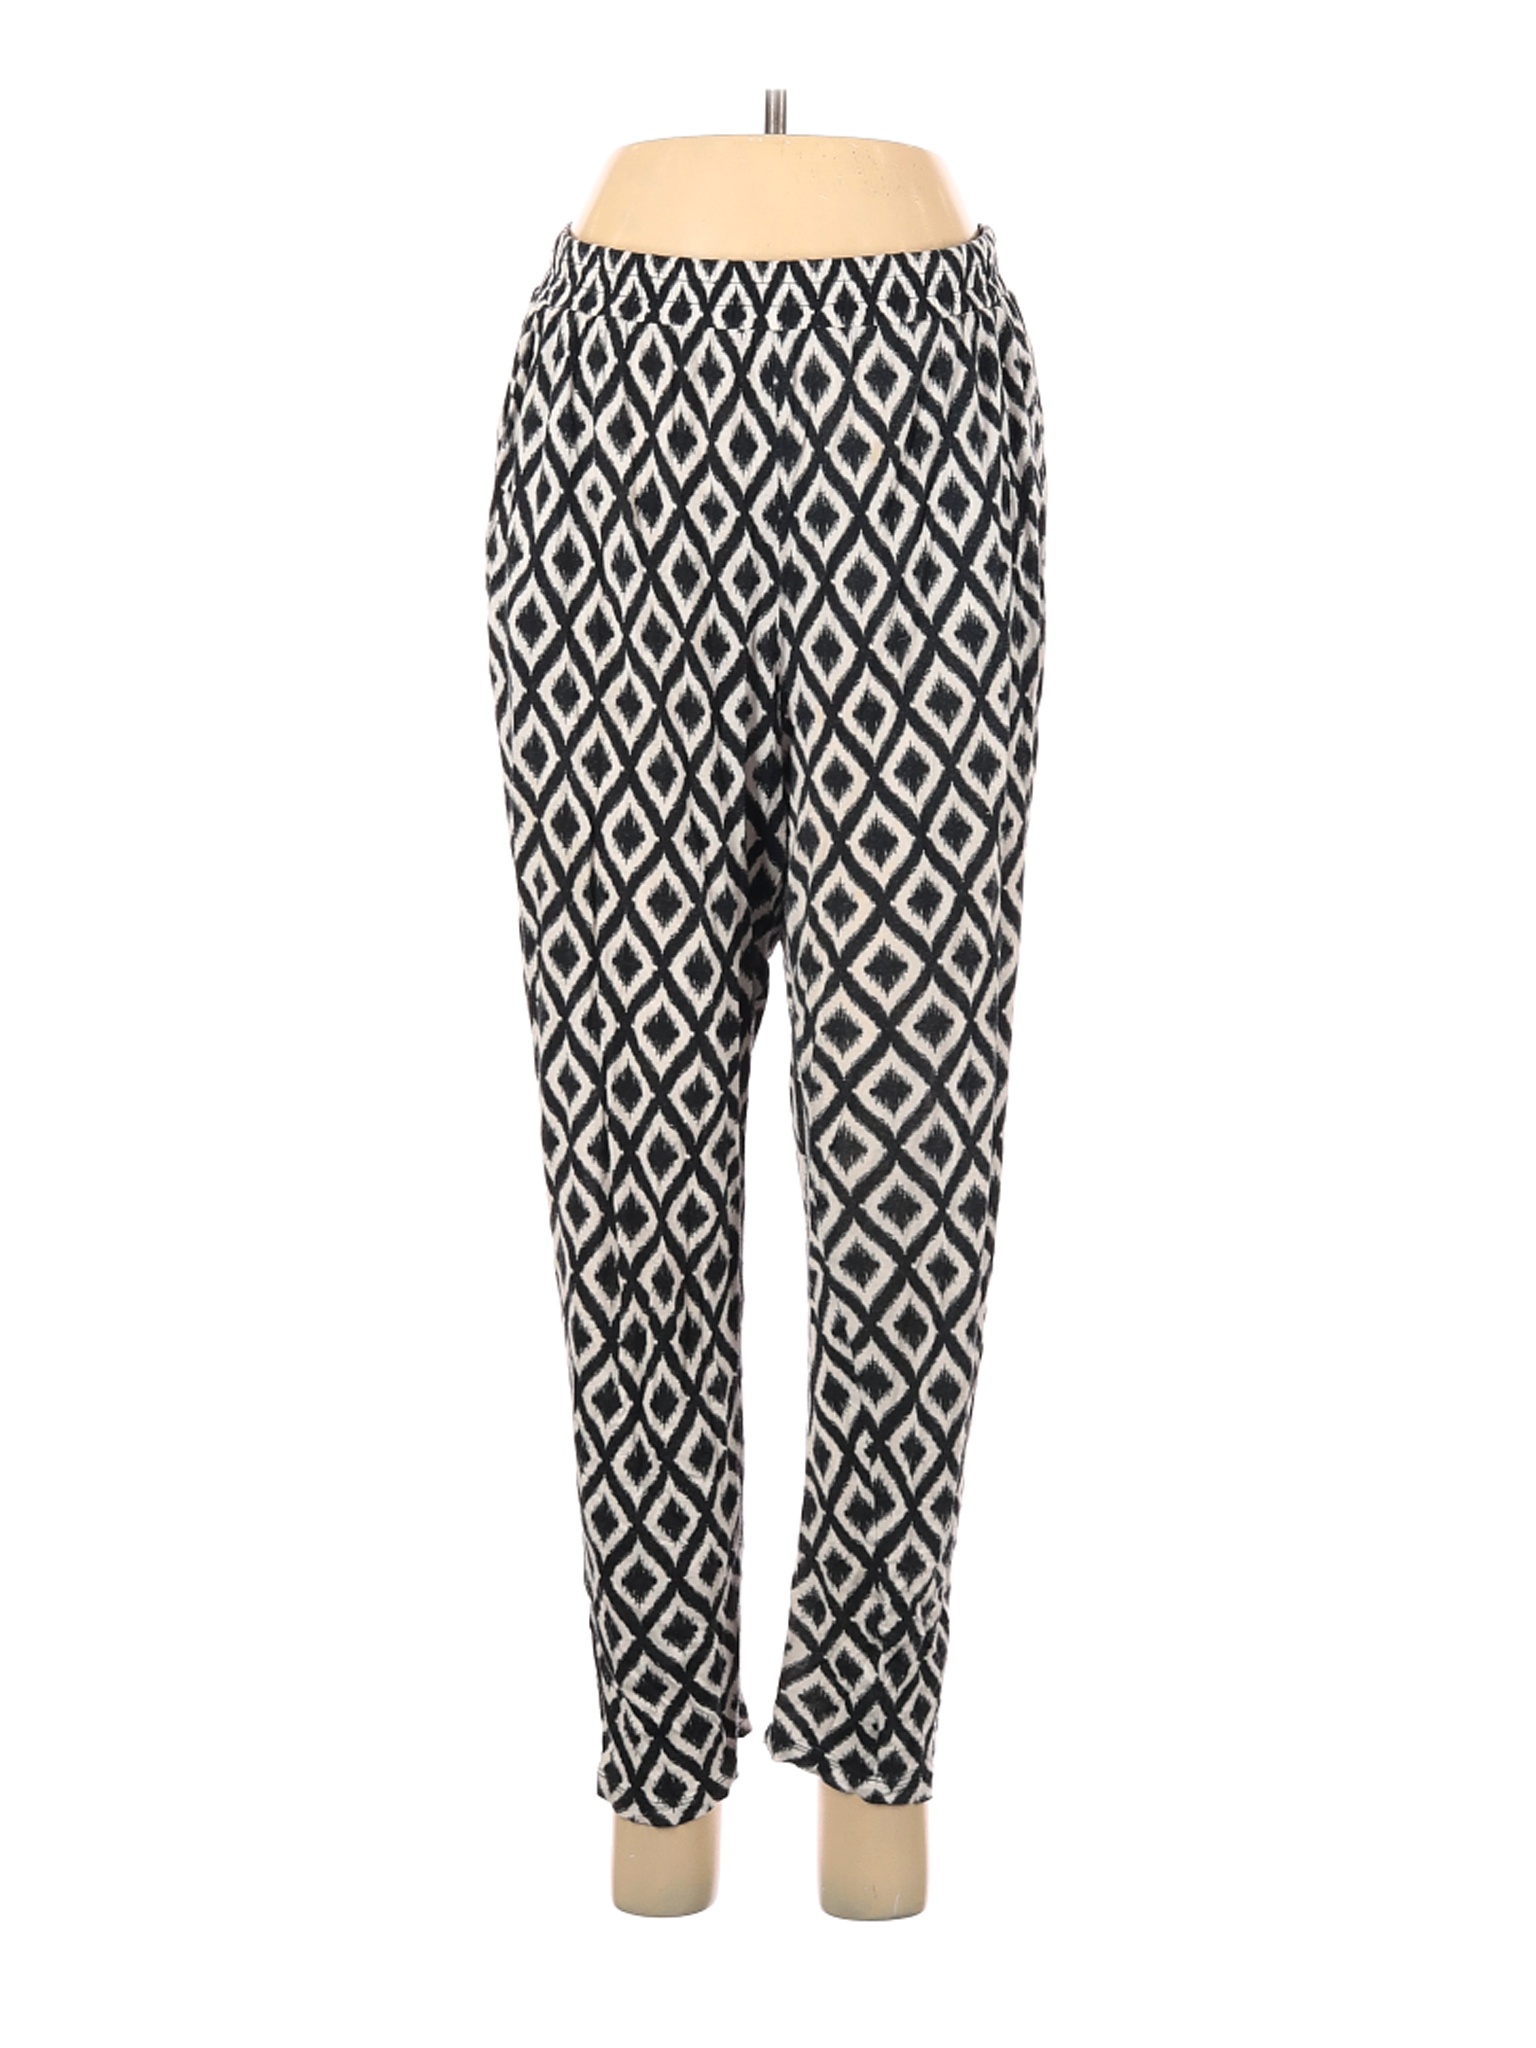 H&M Women Black Casual Pants M | eBay